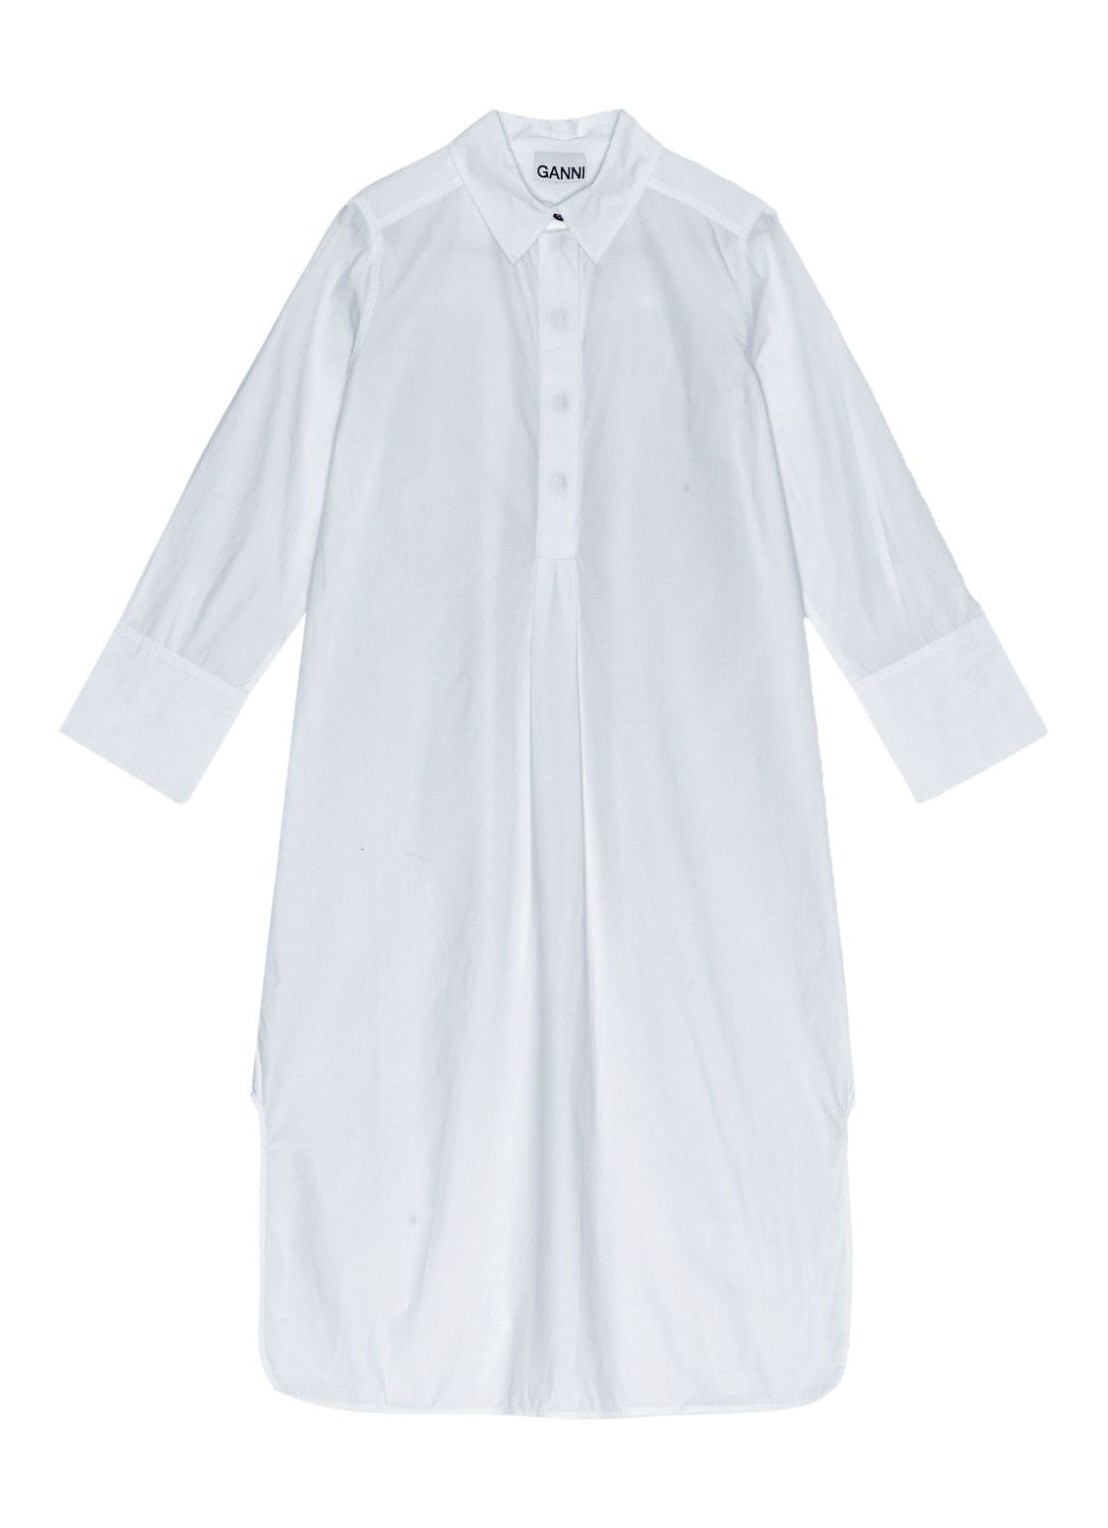 Vestido ganni dress woman cotton poplin oversized shirt dress f8999 151 talla 34
 